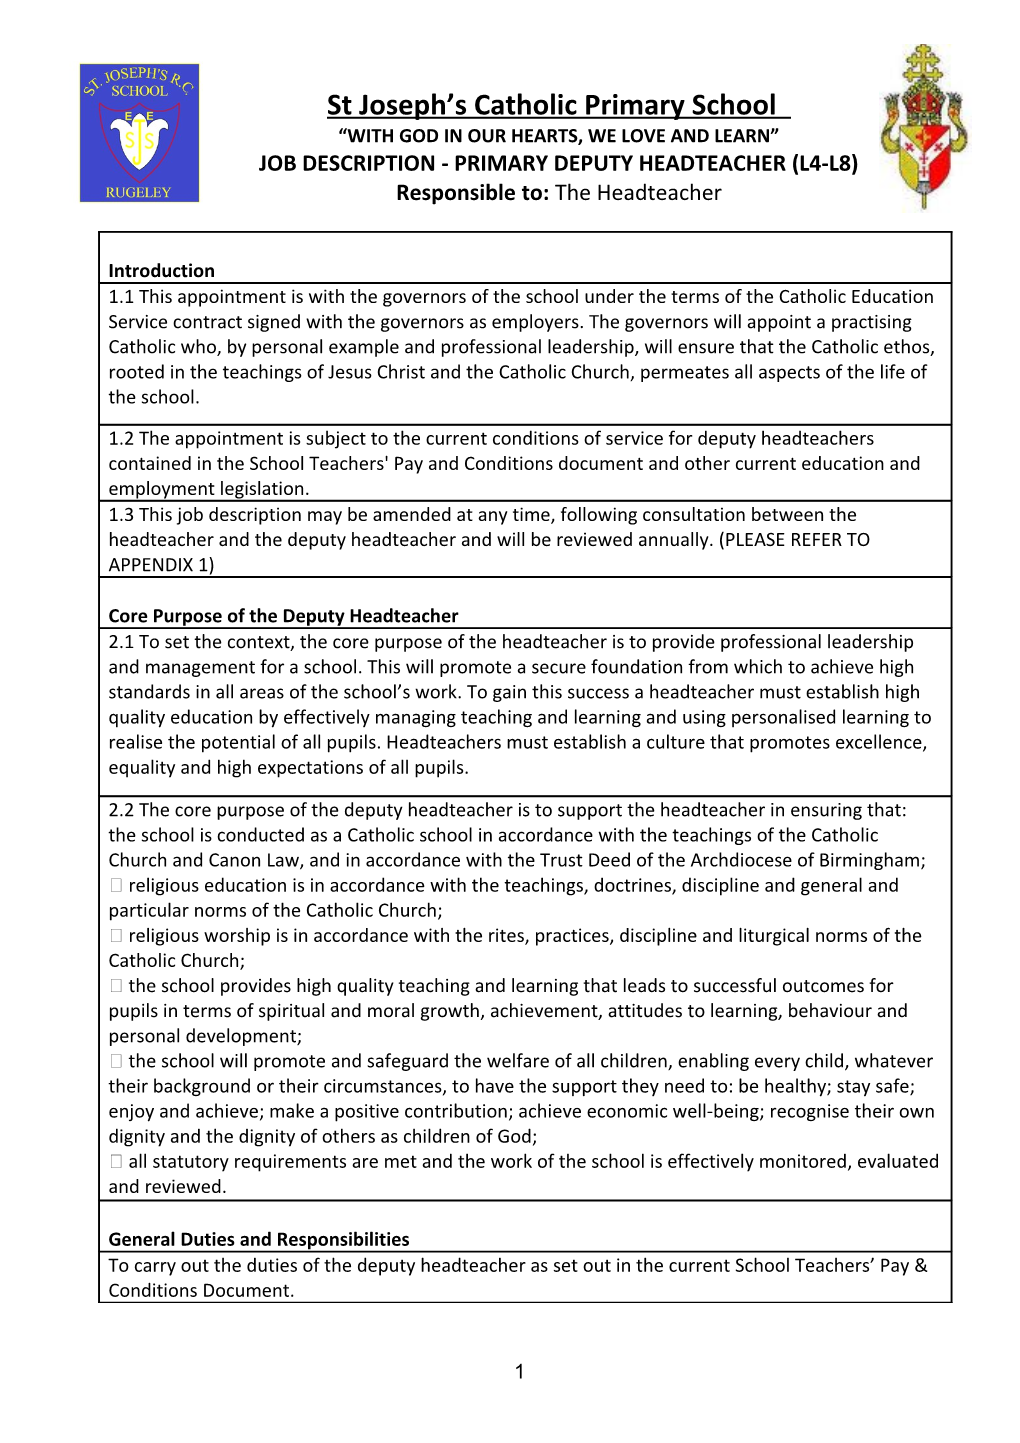 Job Description - Primary Deputy Headteacher